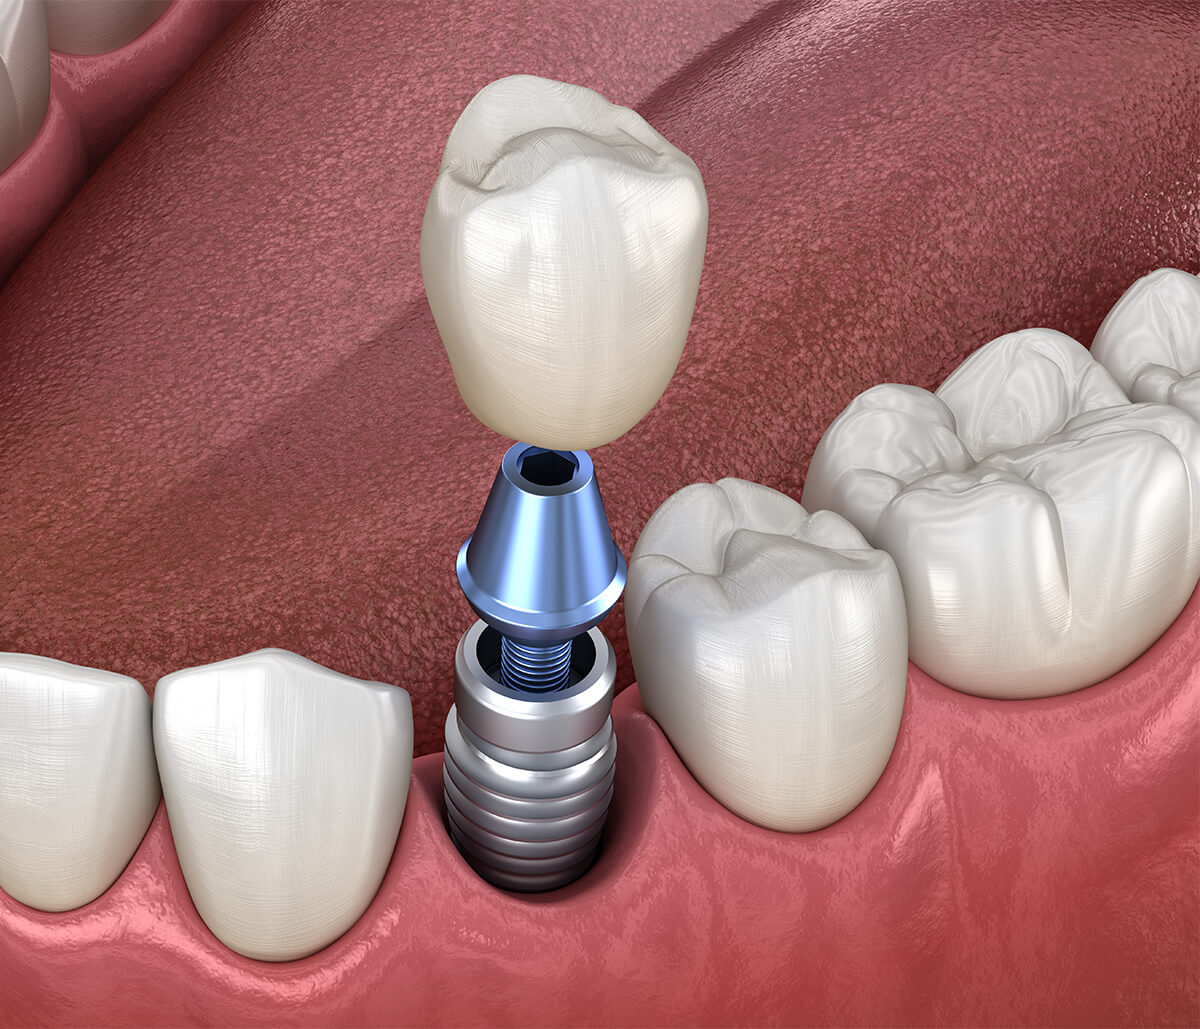 Dental Implants in Half Moon Bay Area